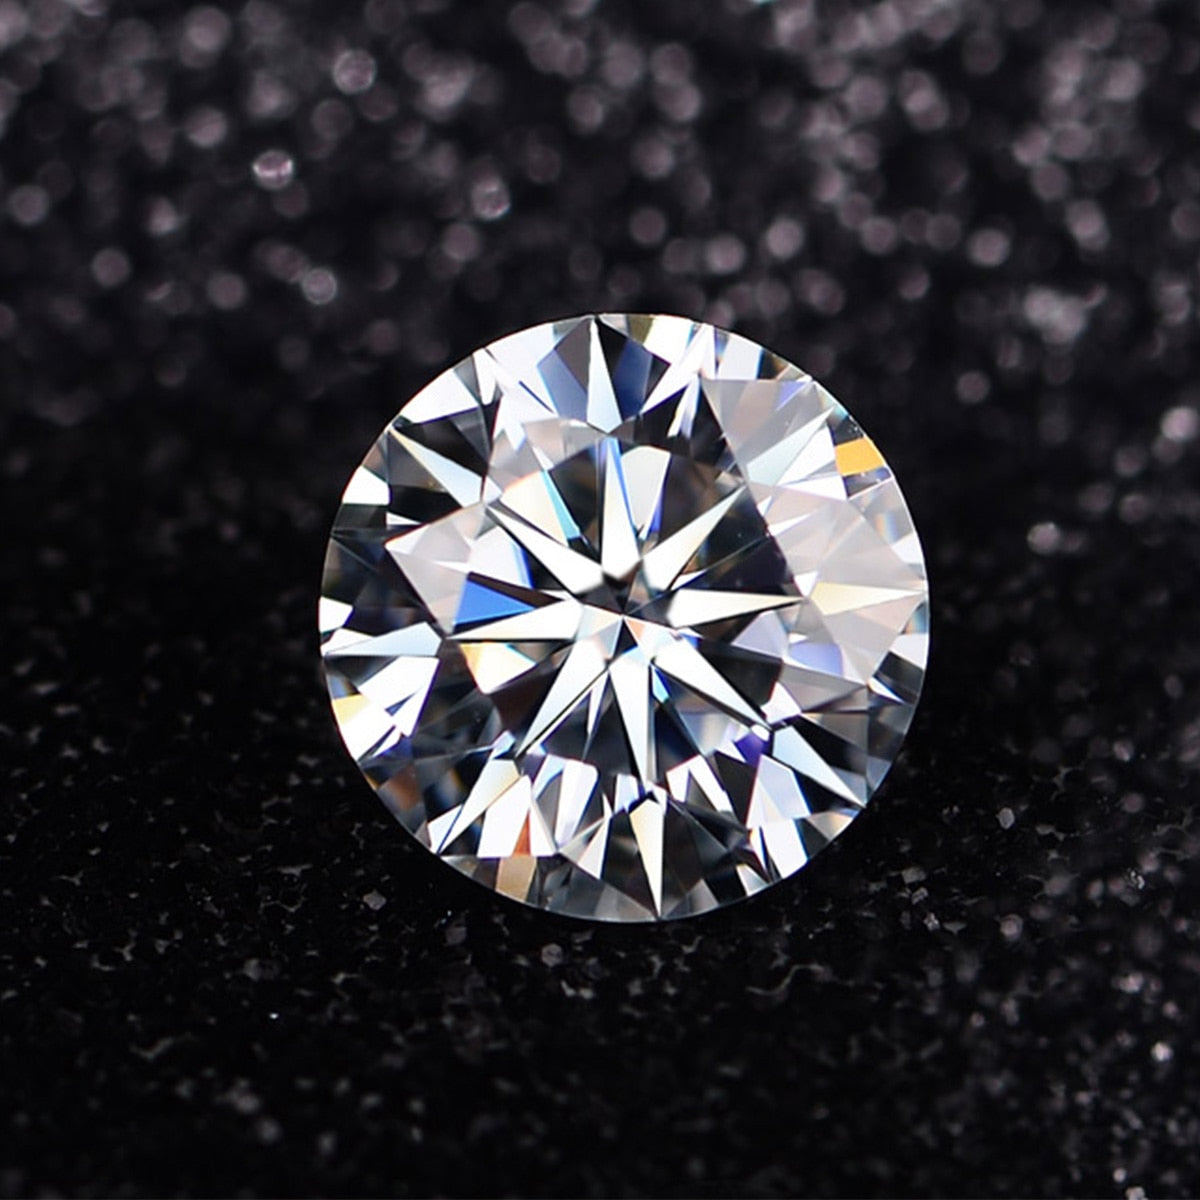 10 Karat 14 mm echter Moissanit-Diamant G Farbe VVS1